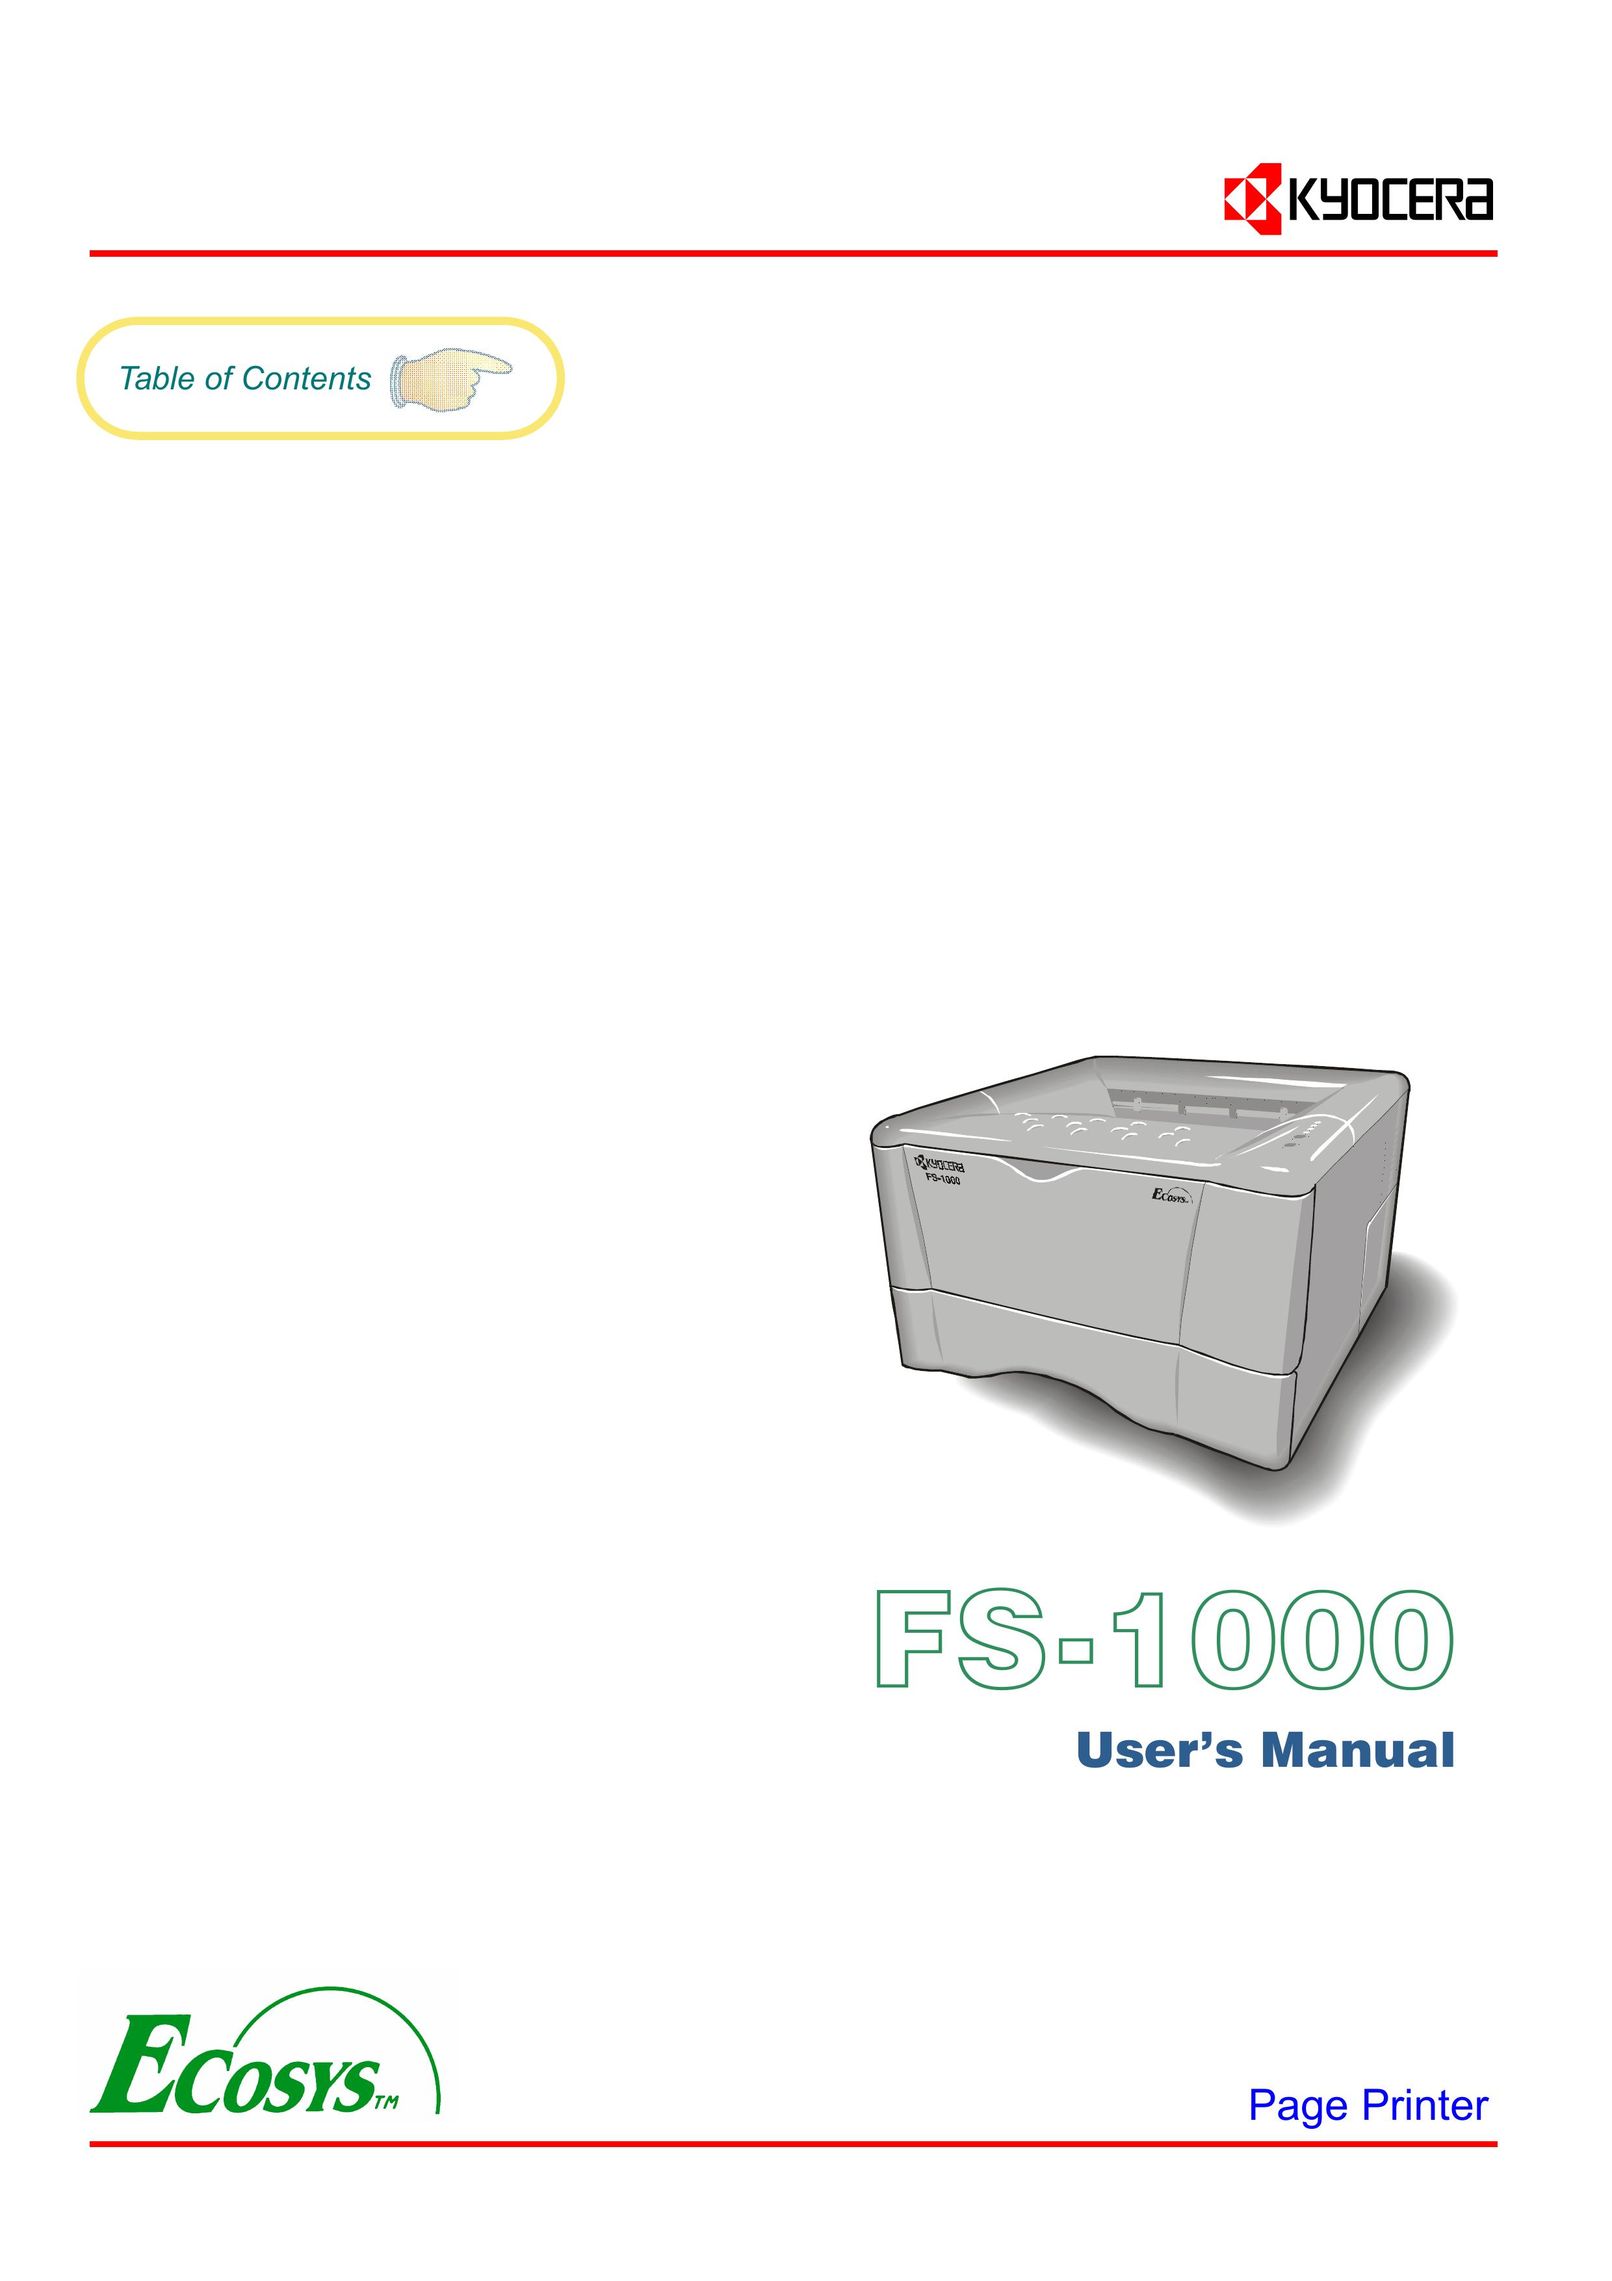 Kyocera FS-1000 Printer User Manual (Page 1)